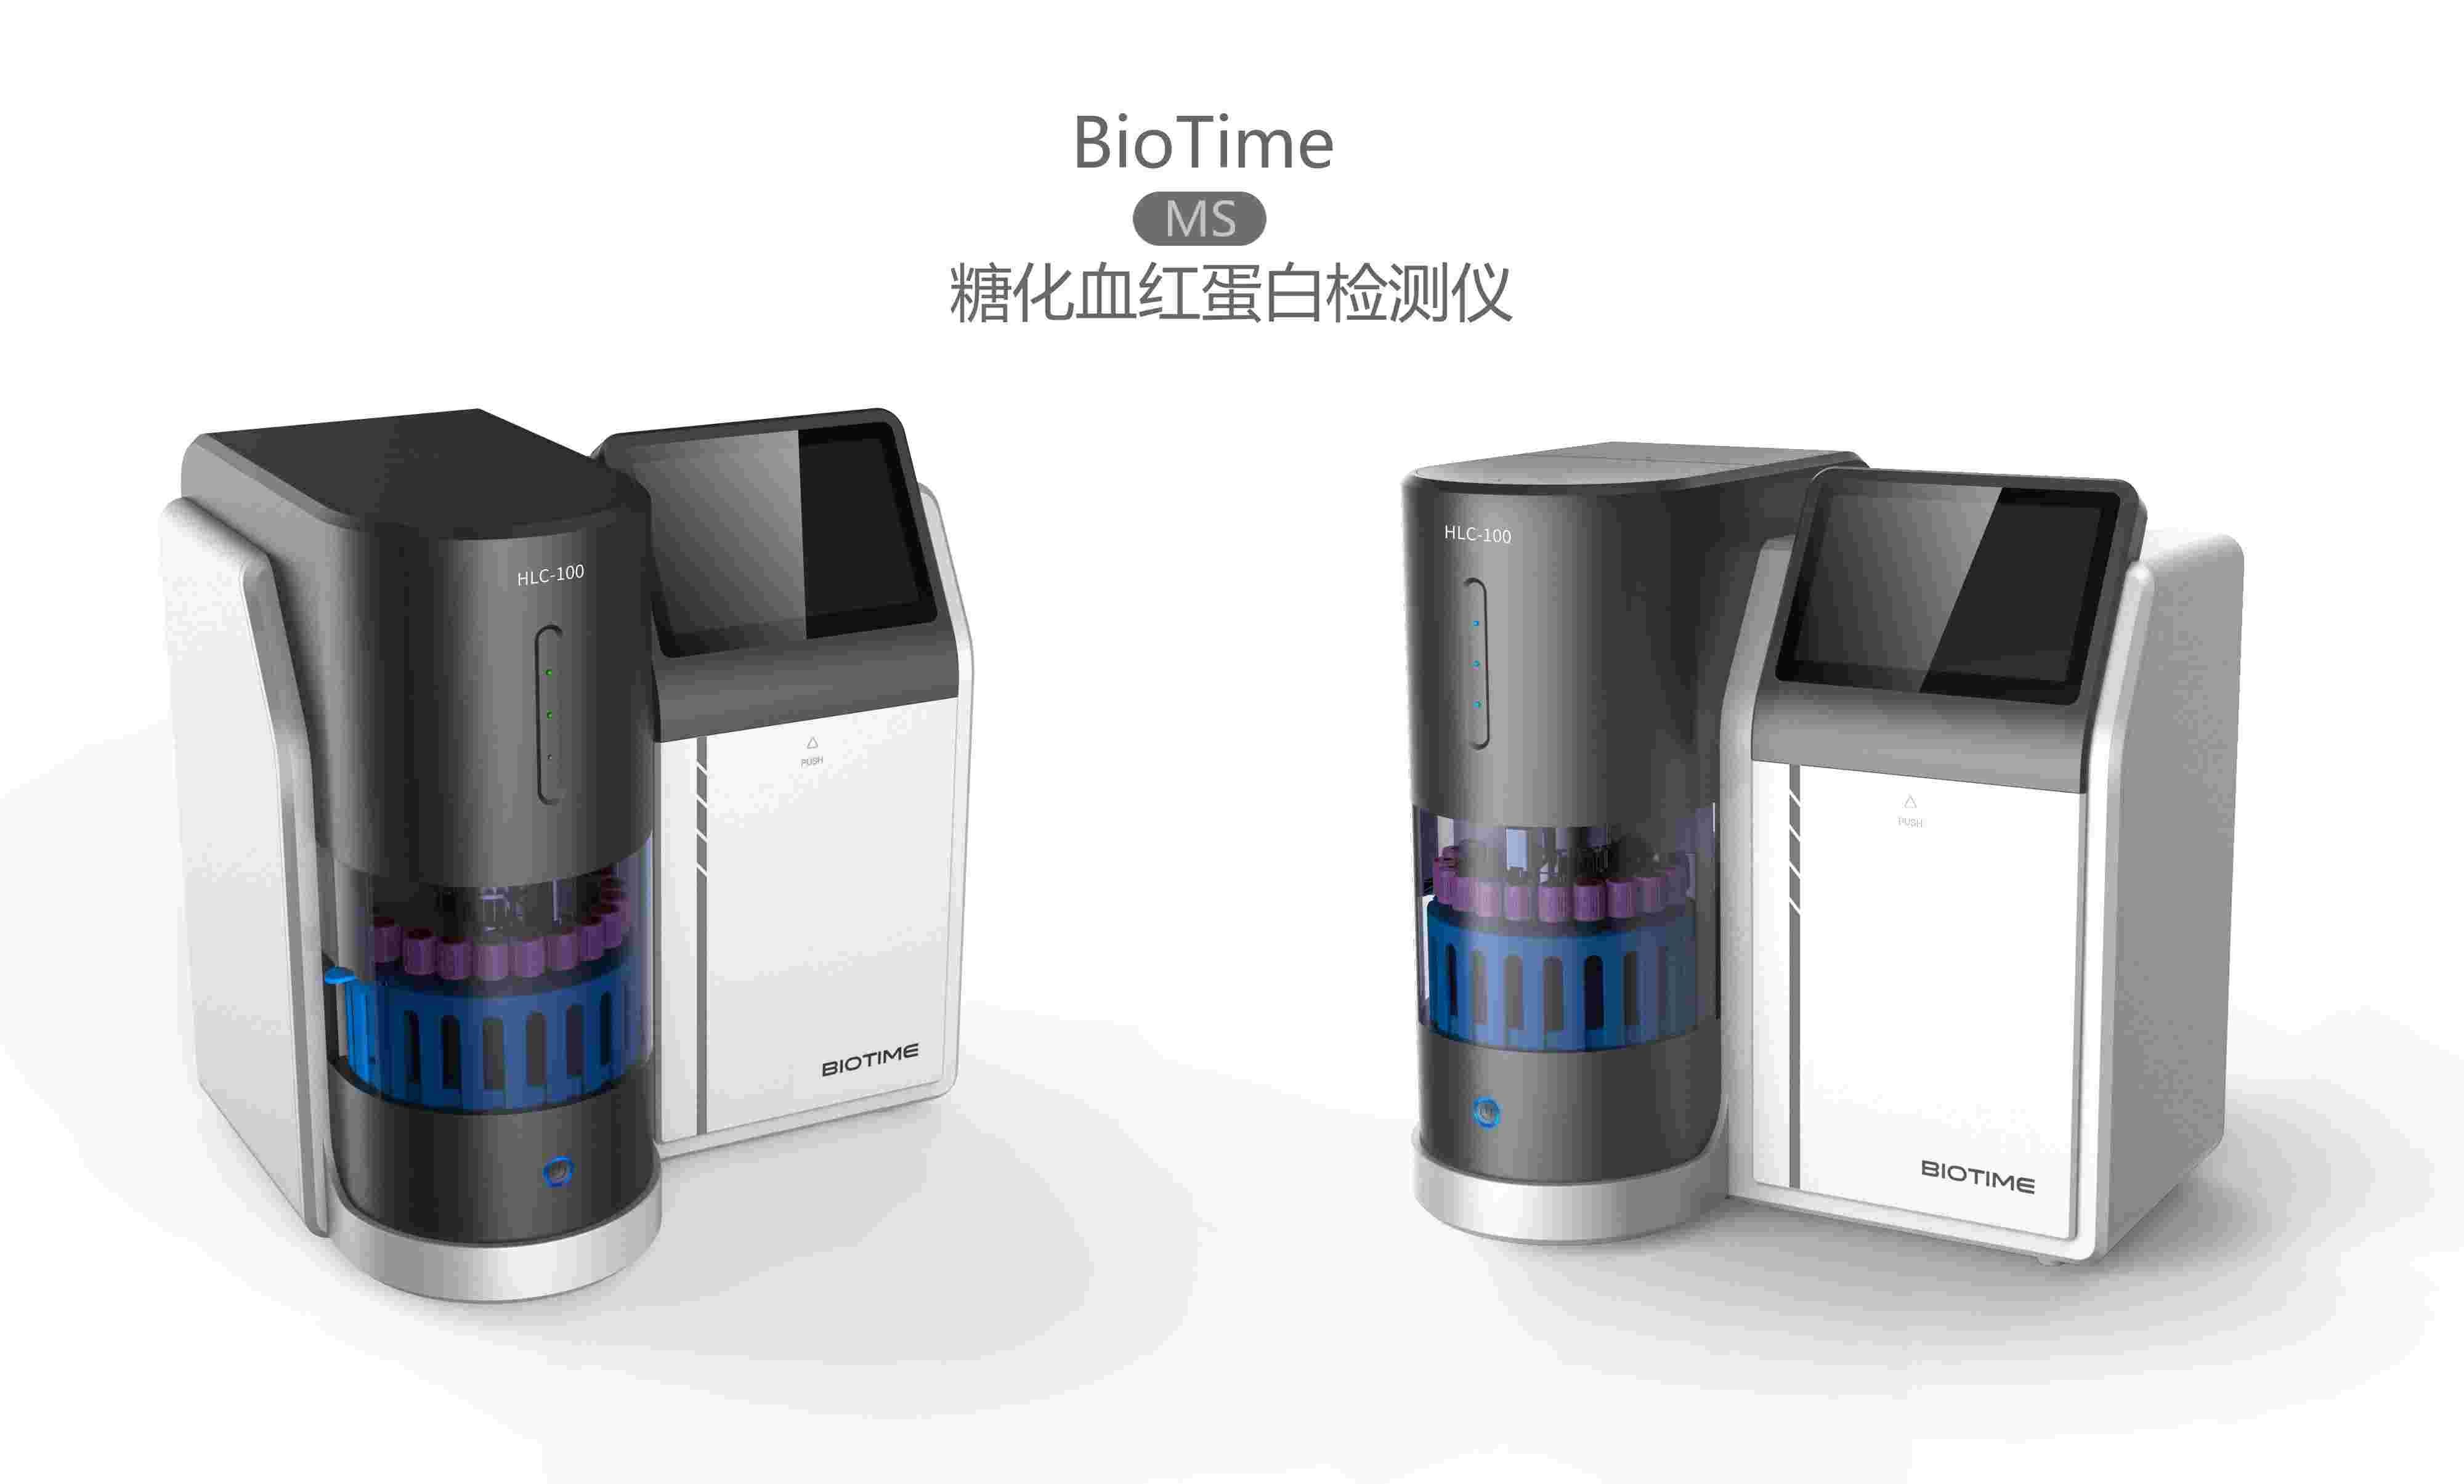 Biotime HPLC analyzer// Gold standard for HbA1c measurement